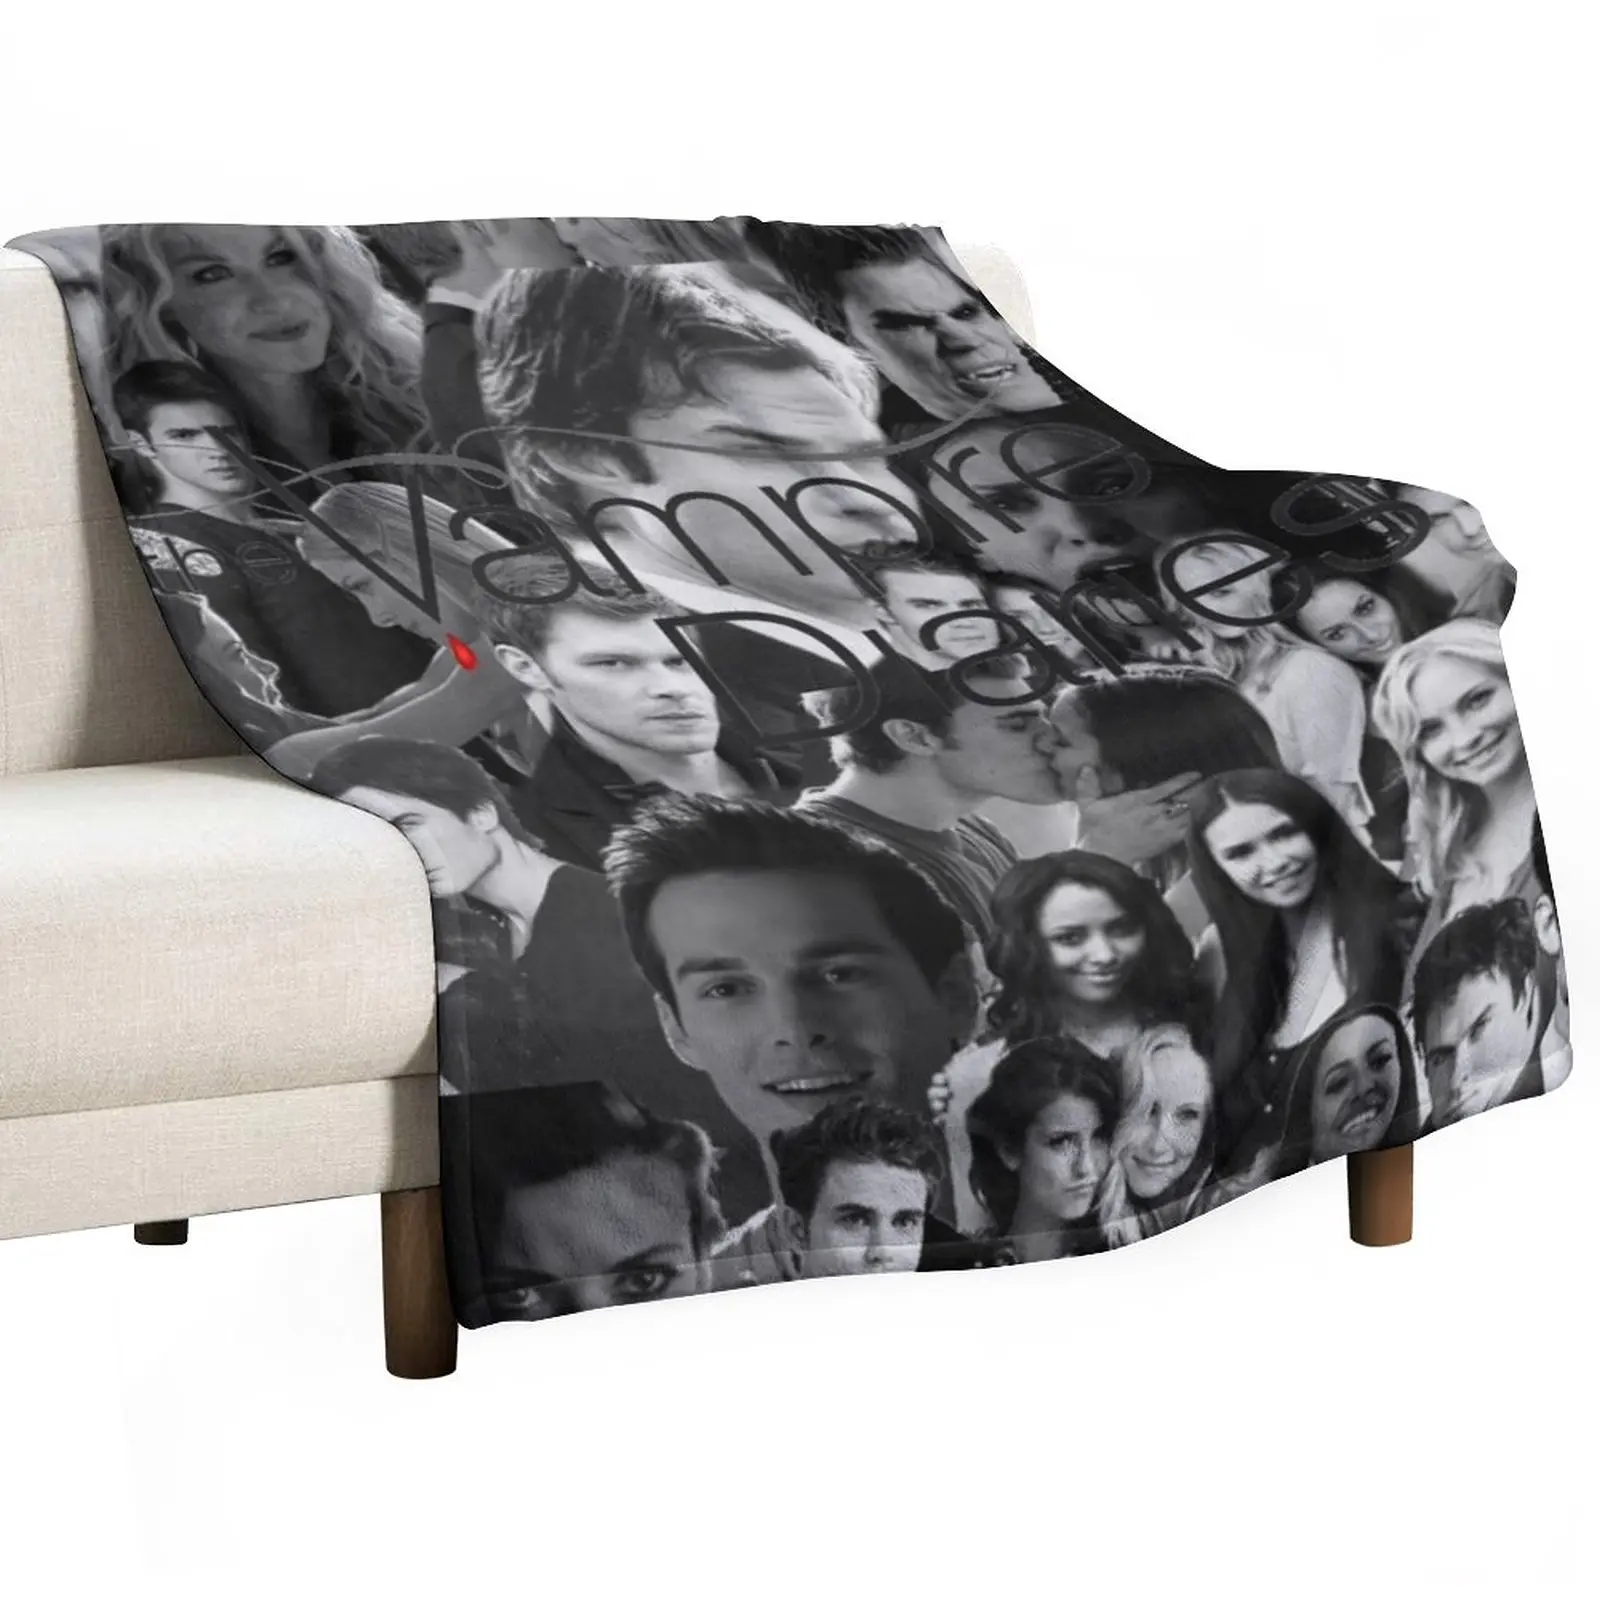 

Vamp collage Throw Blanket Soft Plush Plaid Luxury St Blanket Fluffy Shaggy Blanket Summer Blanket